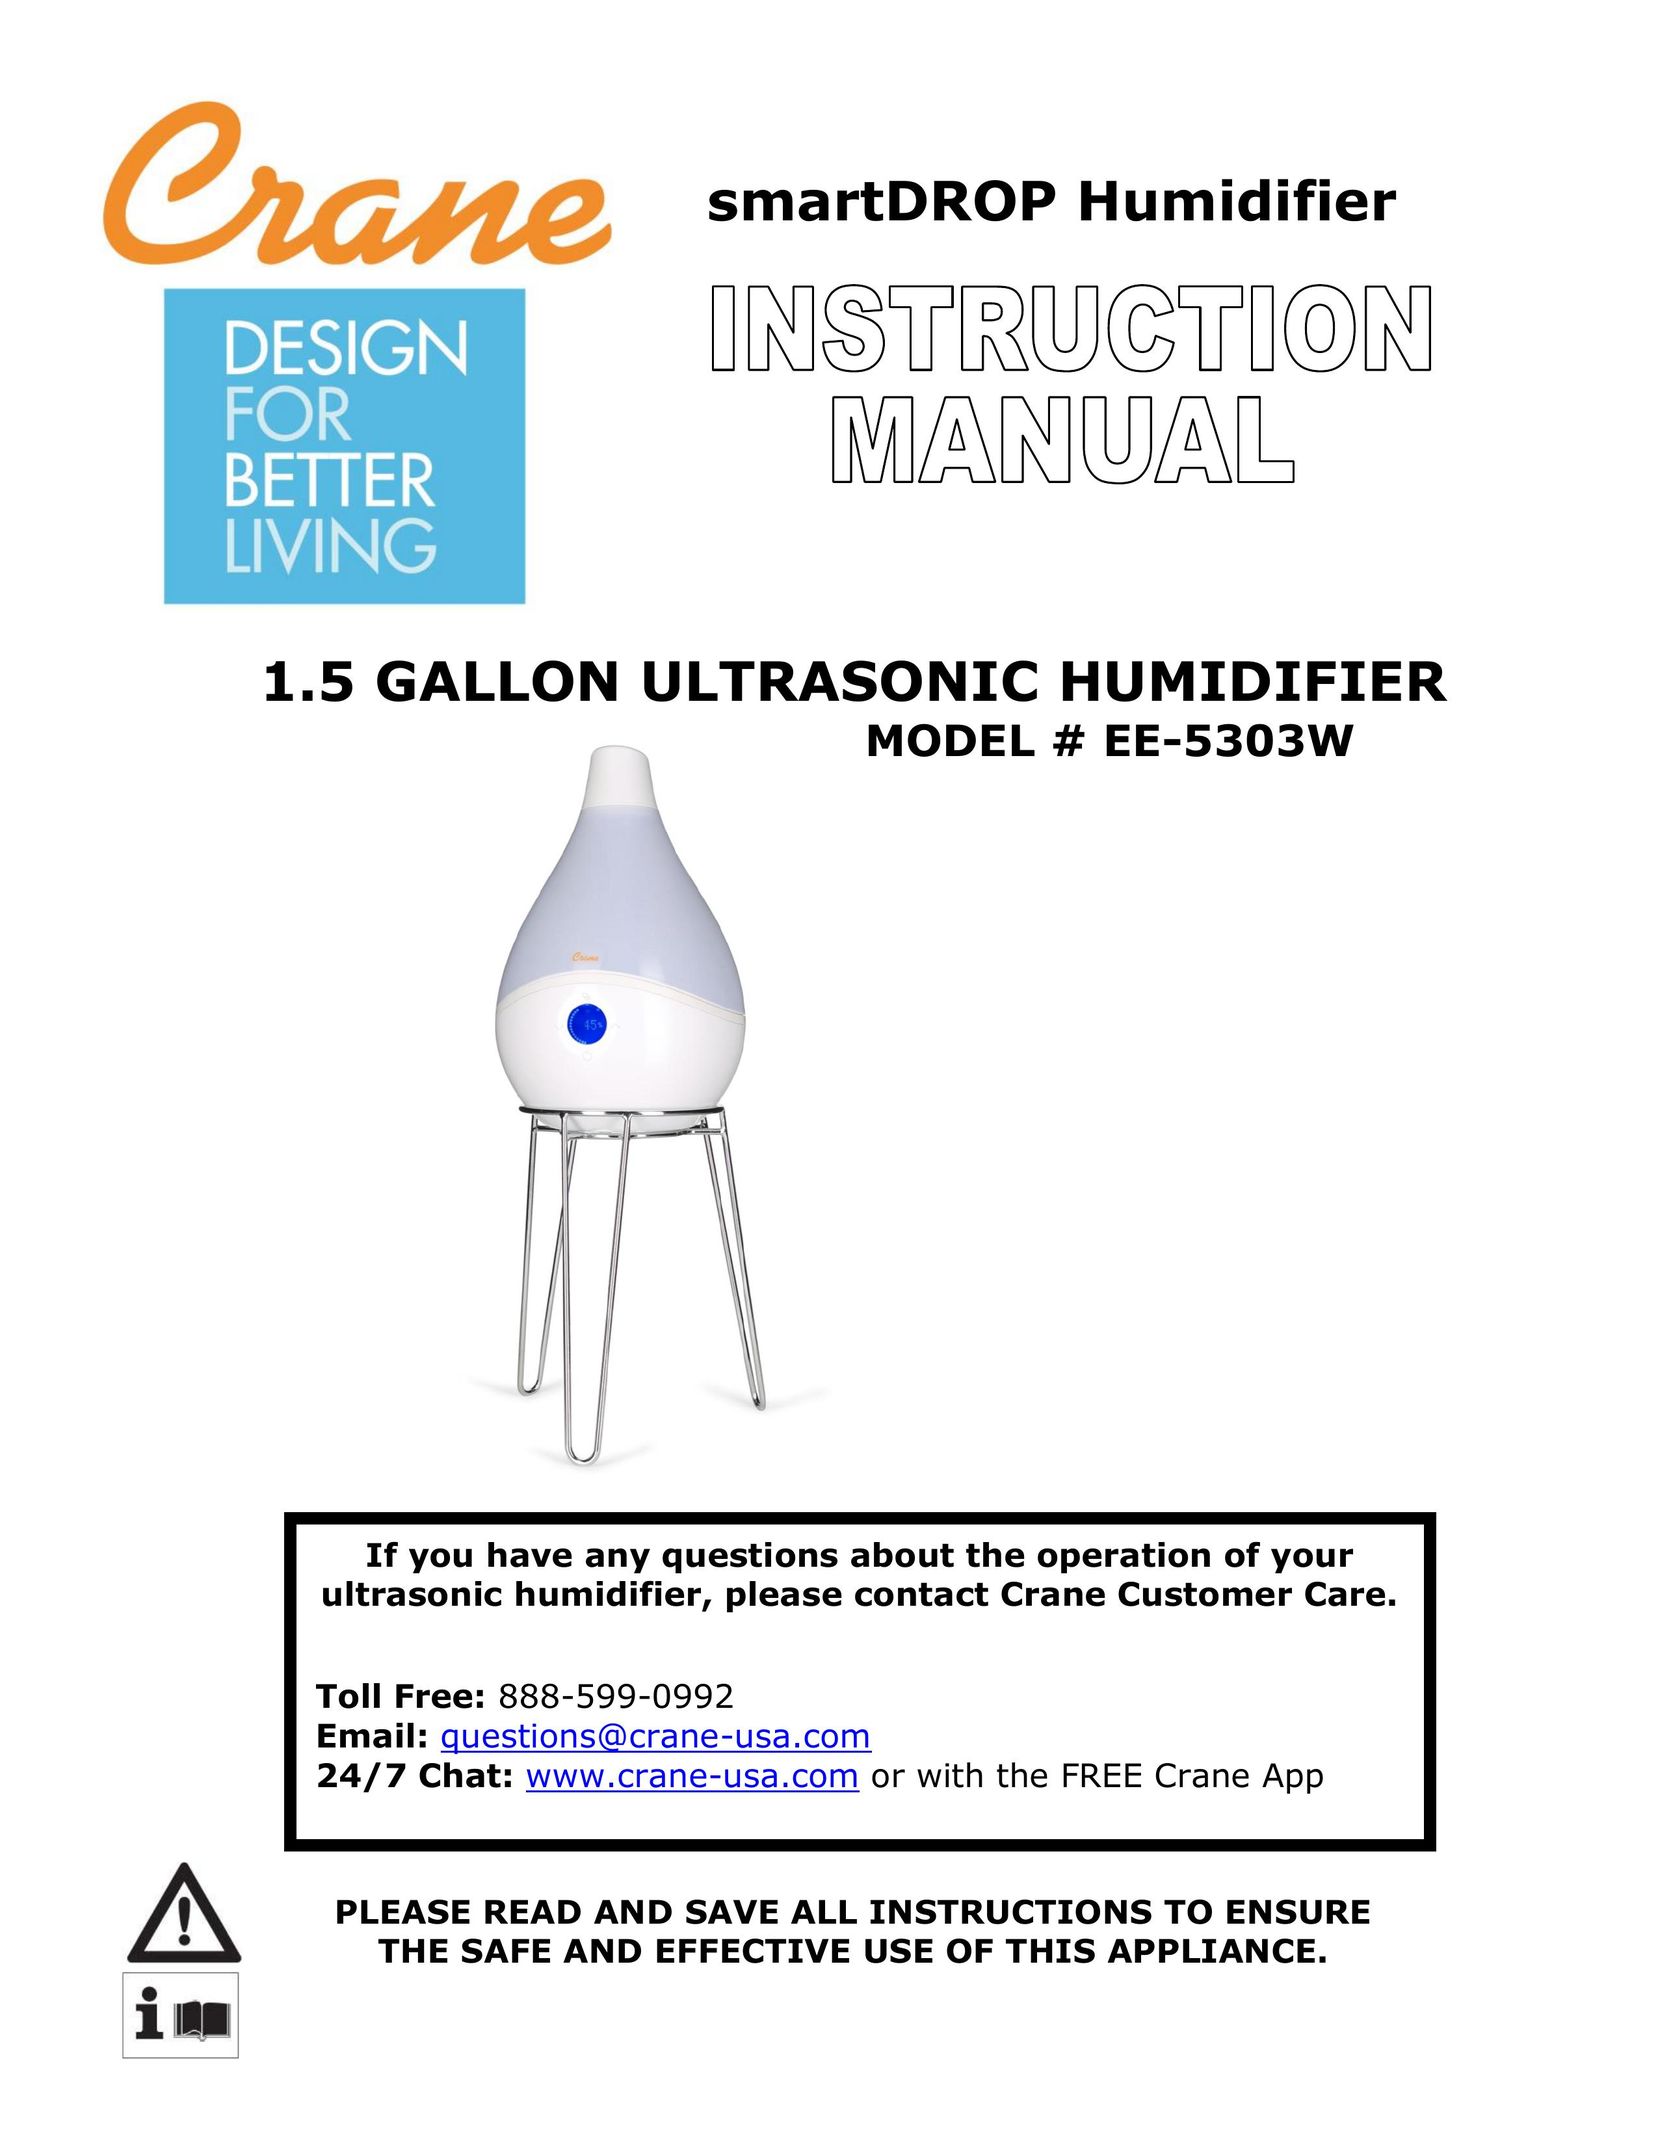 Crane EE-5303W Humidifier User Manual